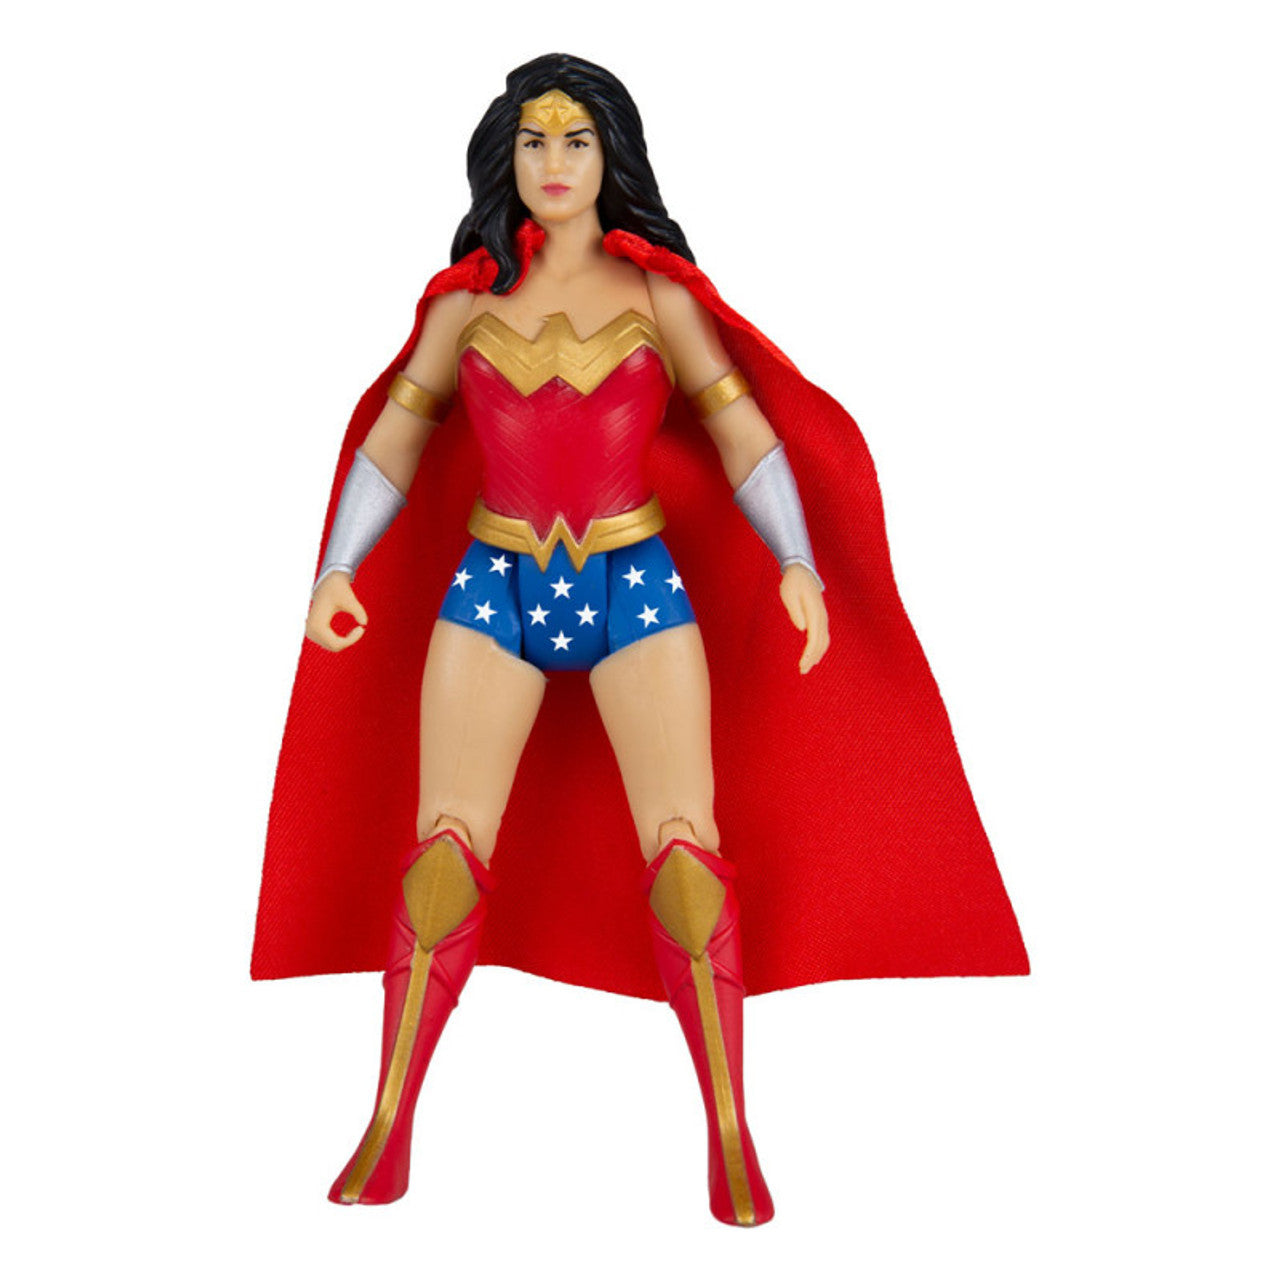 DC Super Powers Wonder Woman with Invisible Jet Bundle